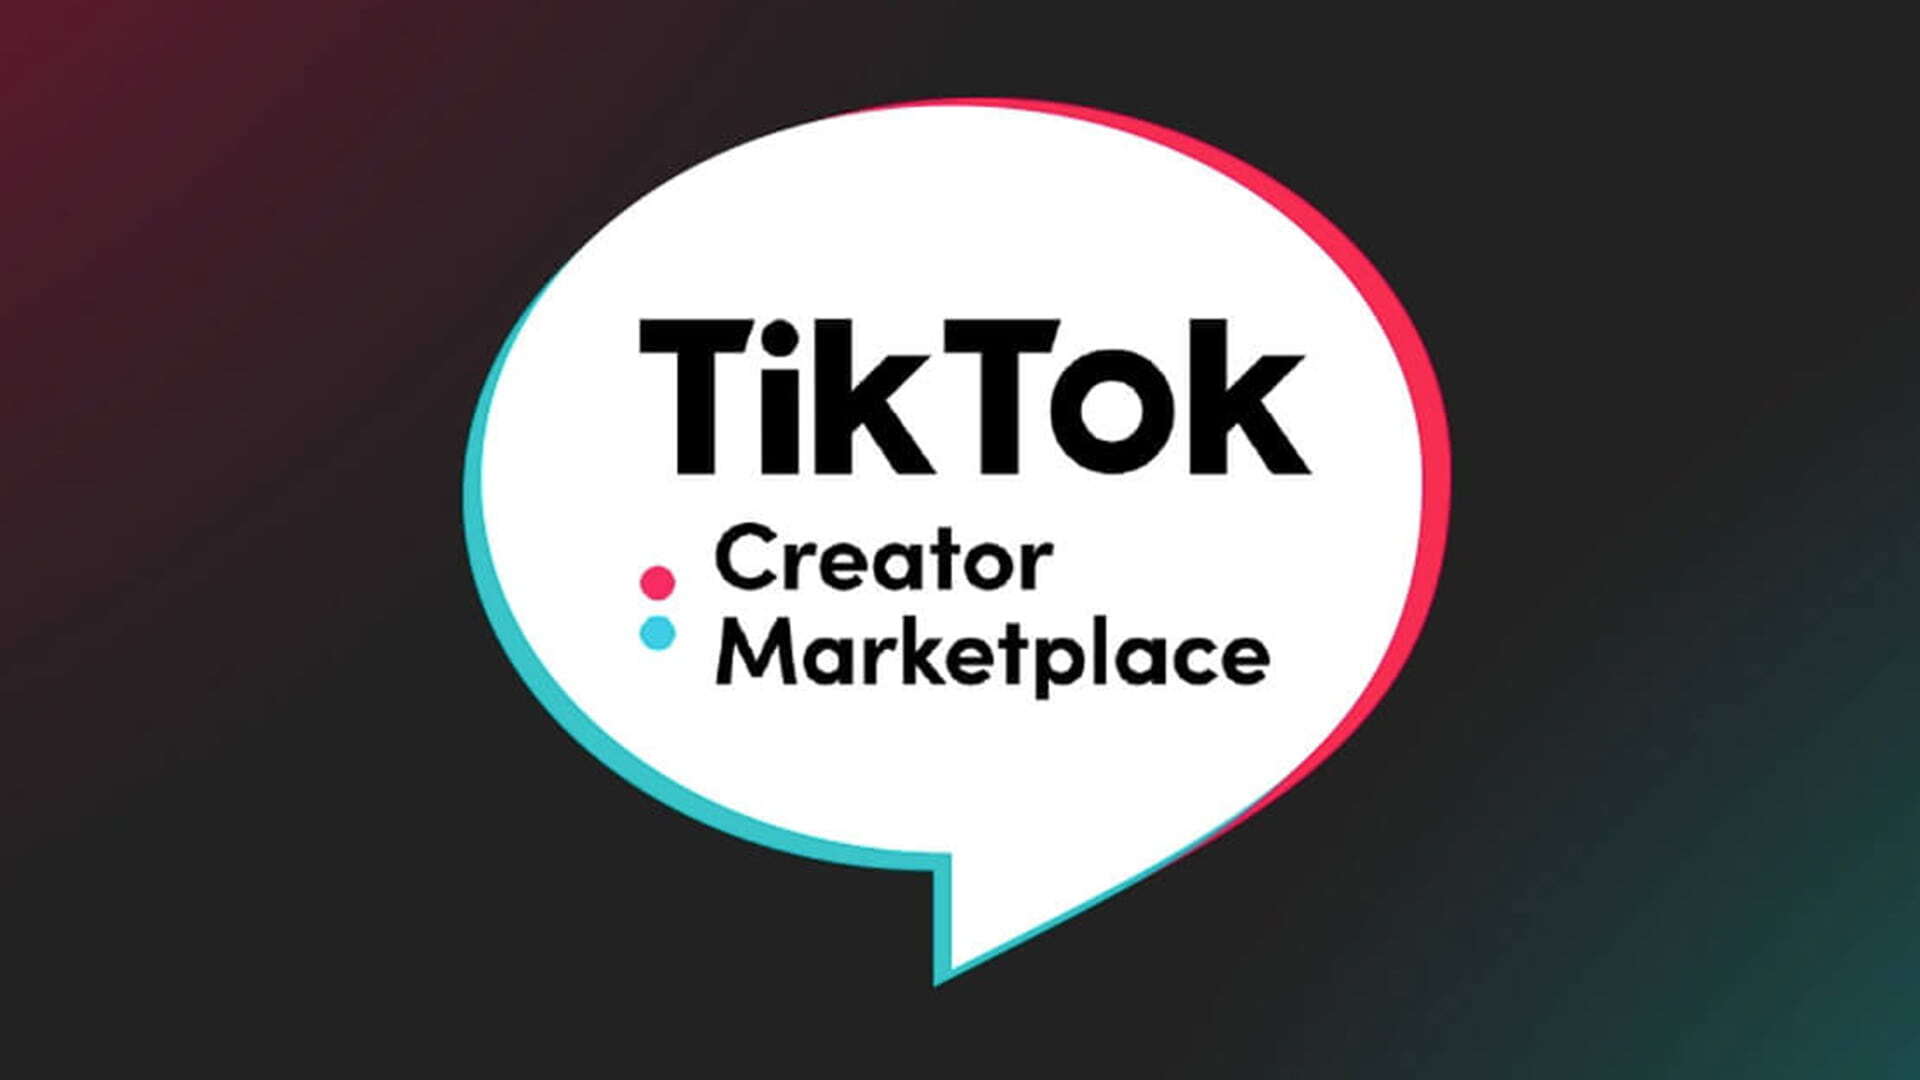 TikTok Creator Marketplace, Creators of TikTok, creators club, world-renowned